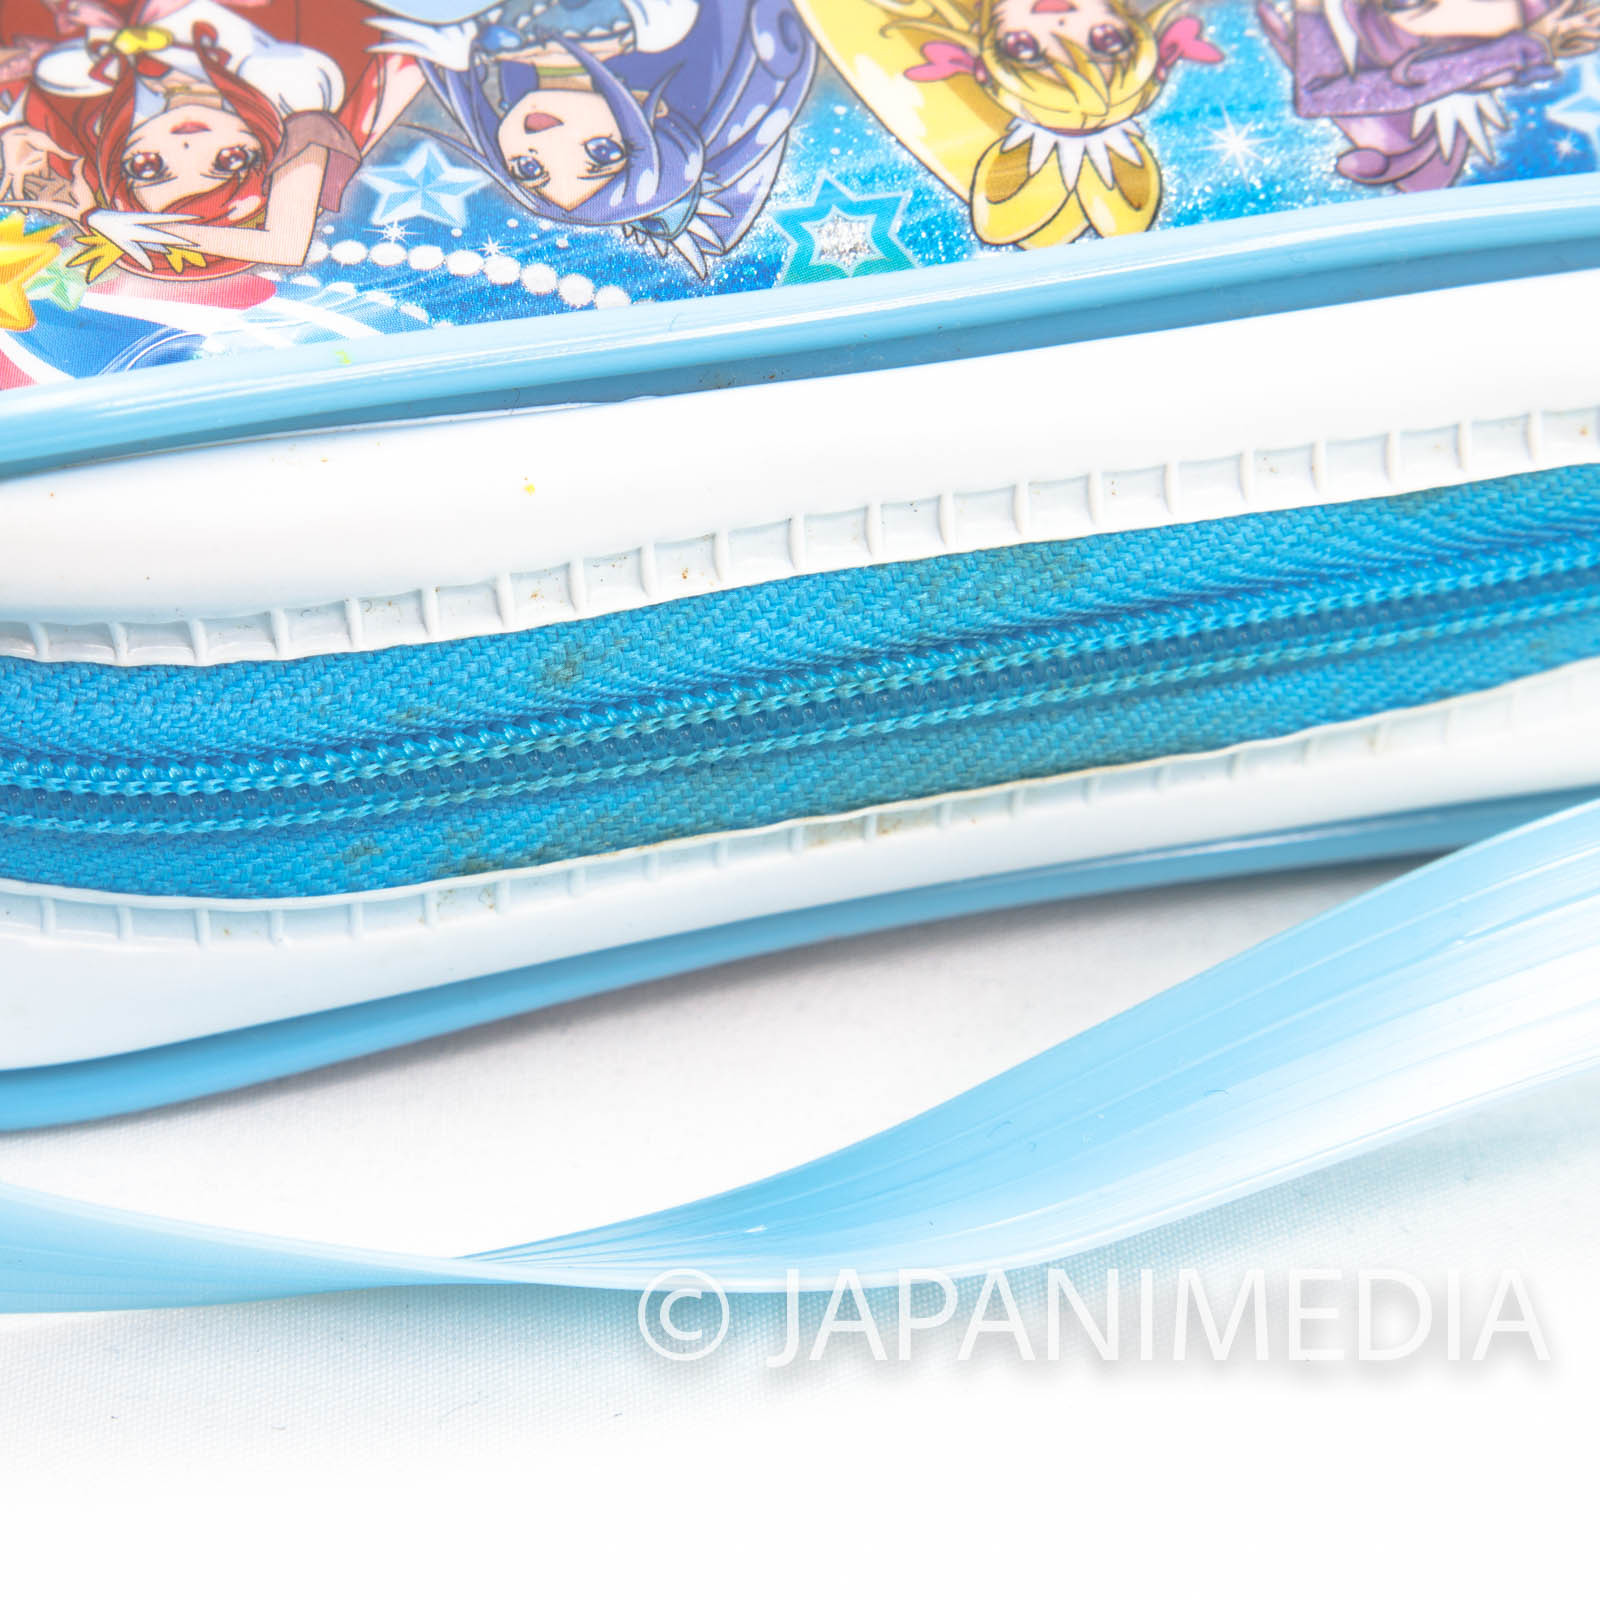 Pretty Cure All Stars Vinyl Mini Pouch Bag (Blue ver.) 2014 JAPAN ANIME